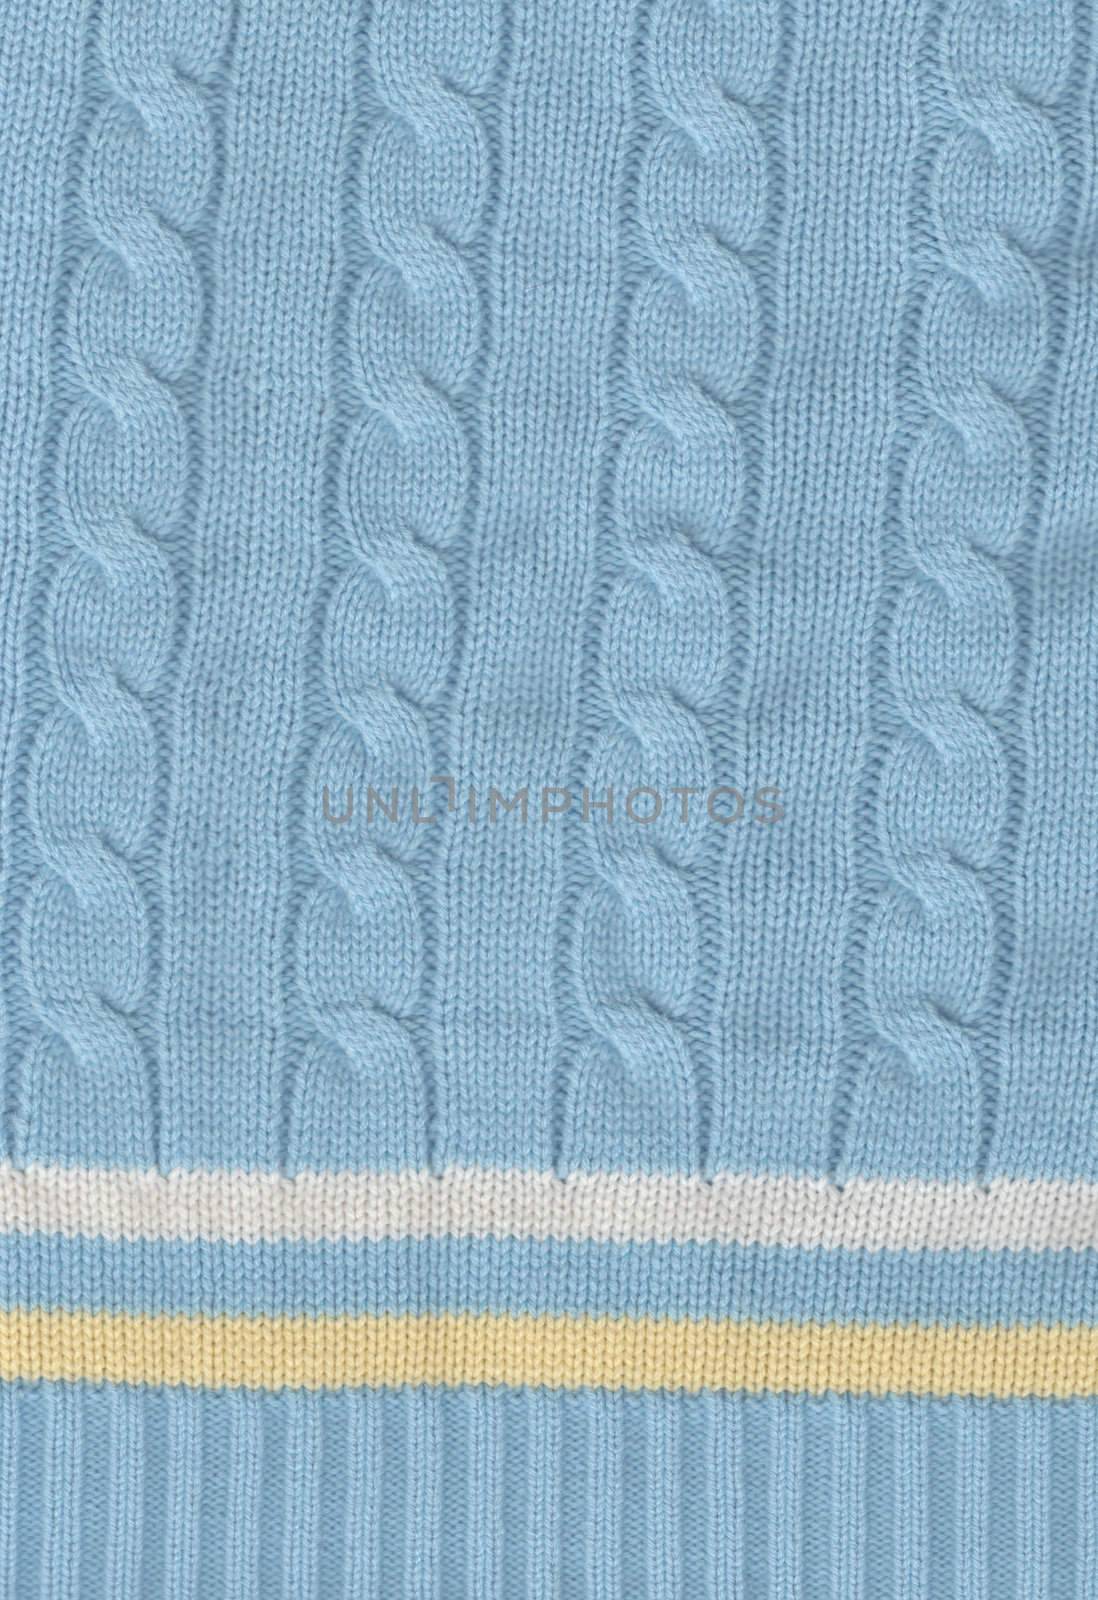 a blue knit tennins sweater background stripped pattern by jeremywhat